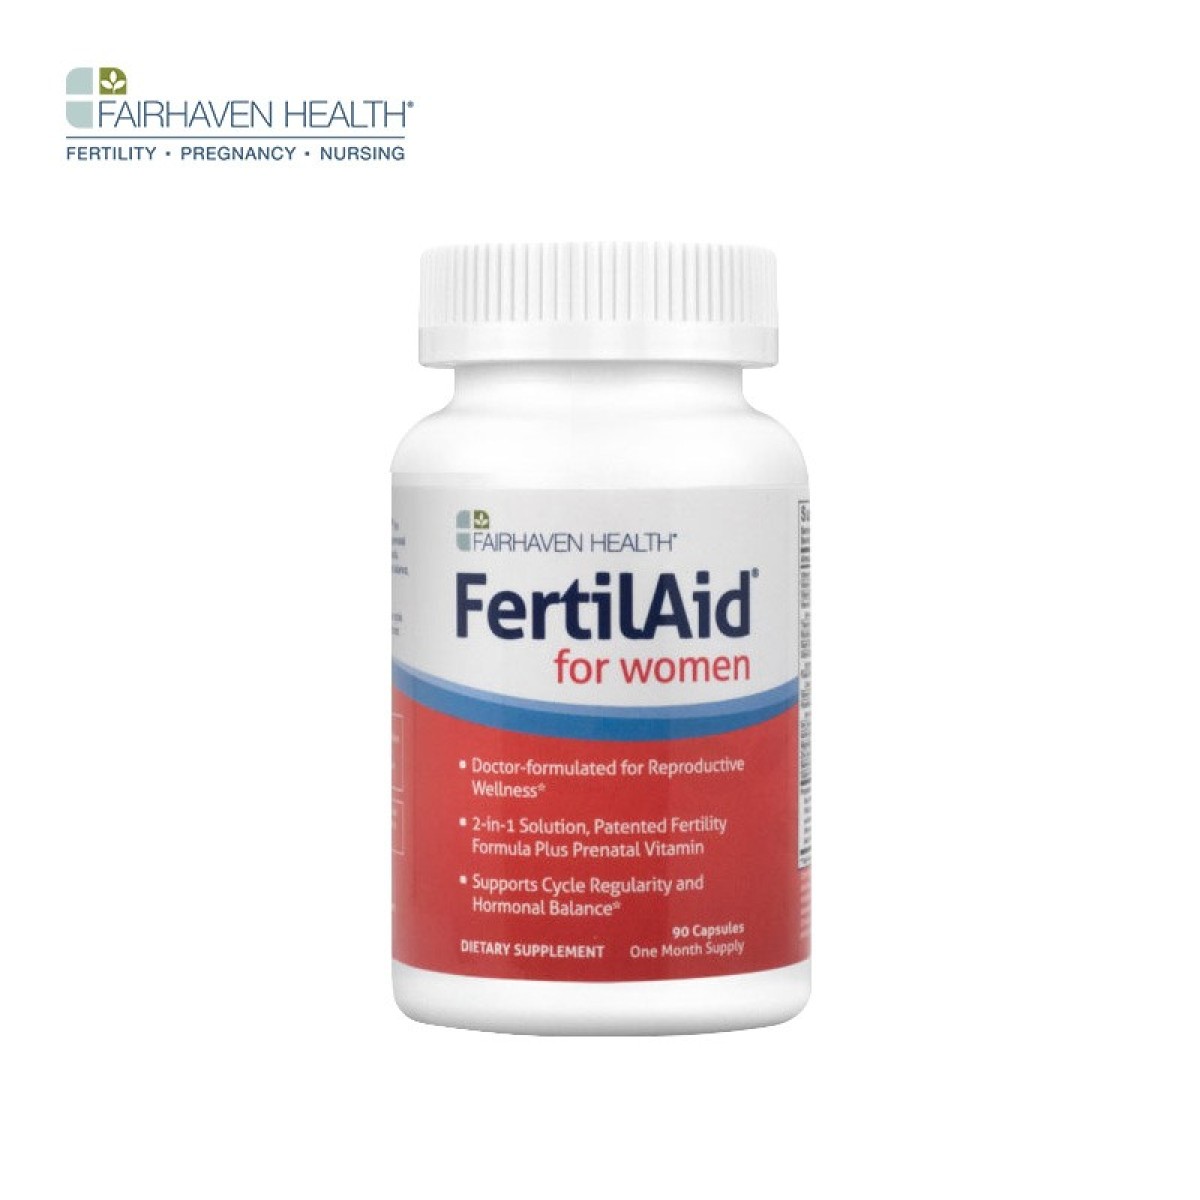 Fairhaven Health 生育補充劑 - FertilAid for women 卵子維生素 (90粒)